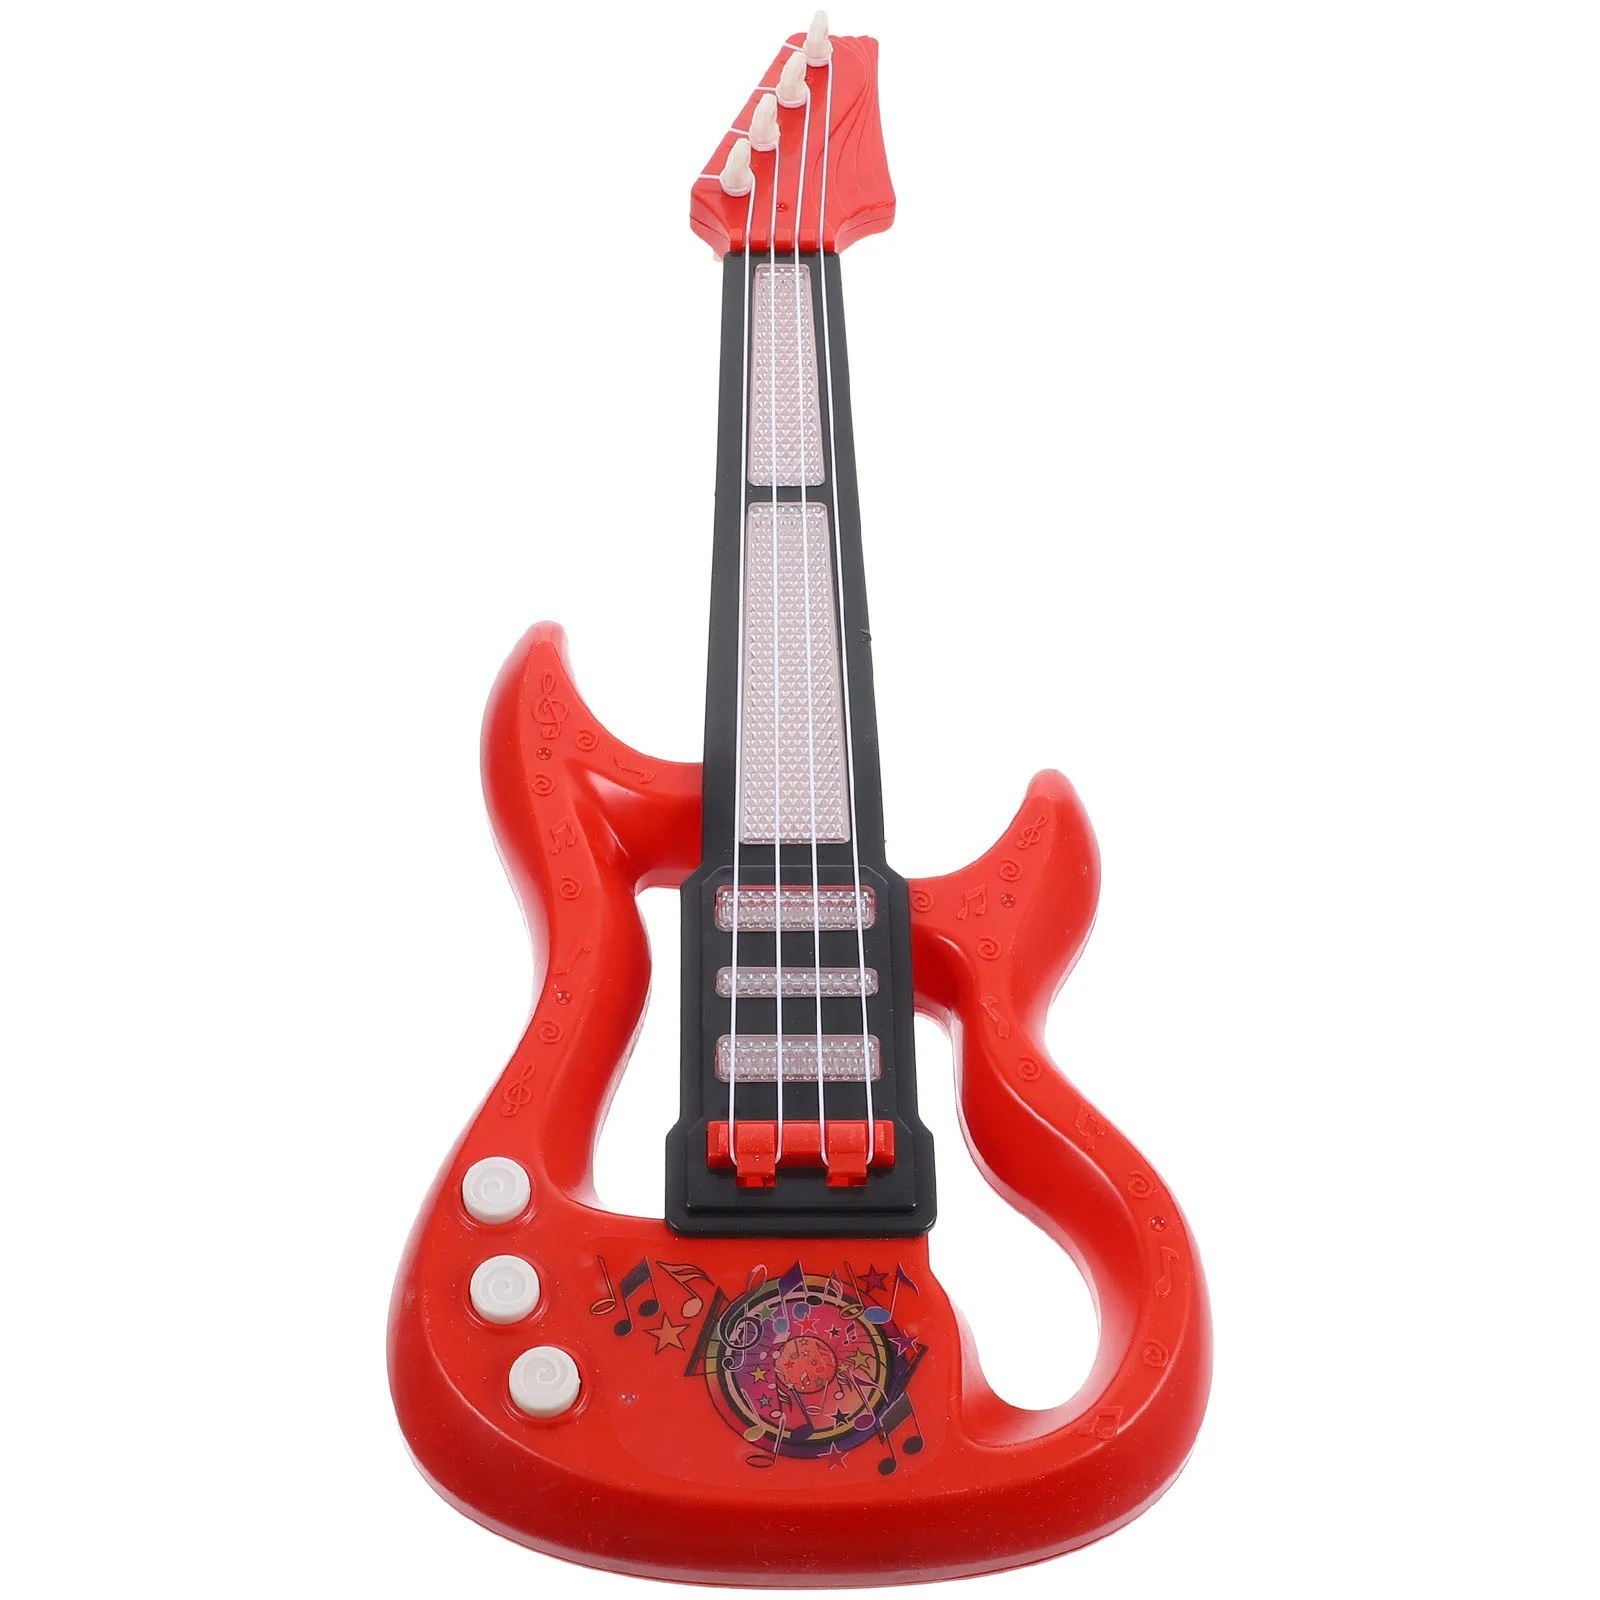 

Ukulele Toy Early Education Music Toy Simulation Guitar Playing Toy for Child